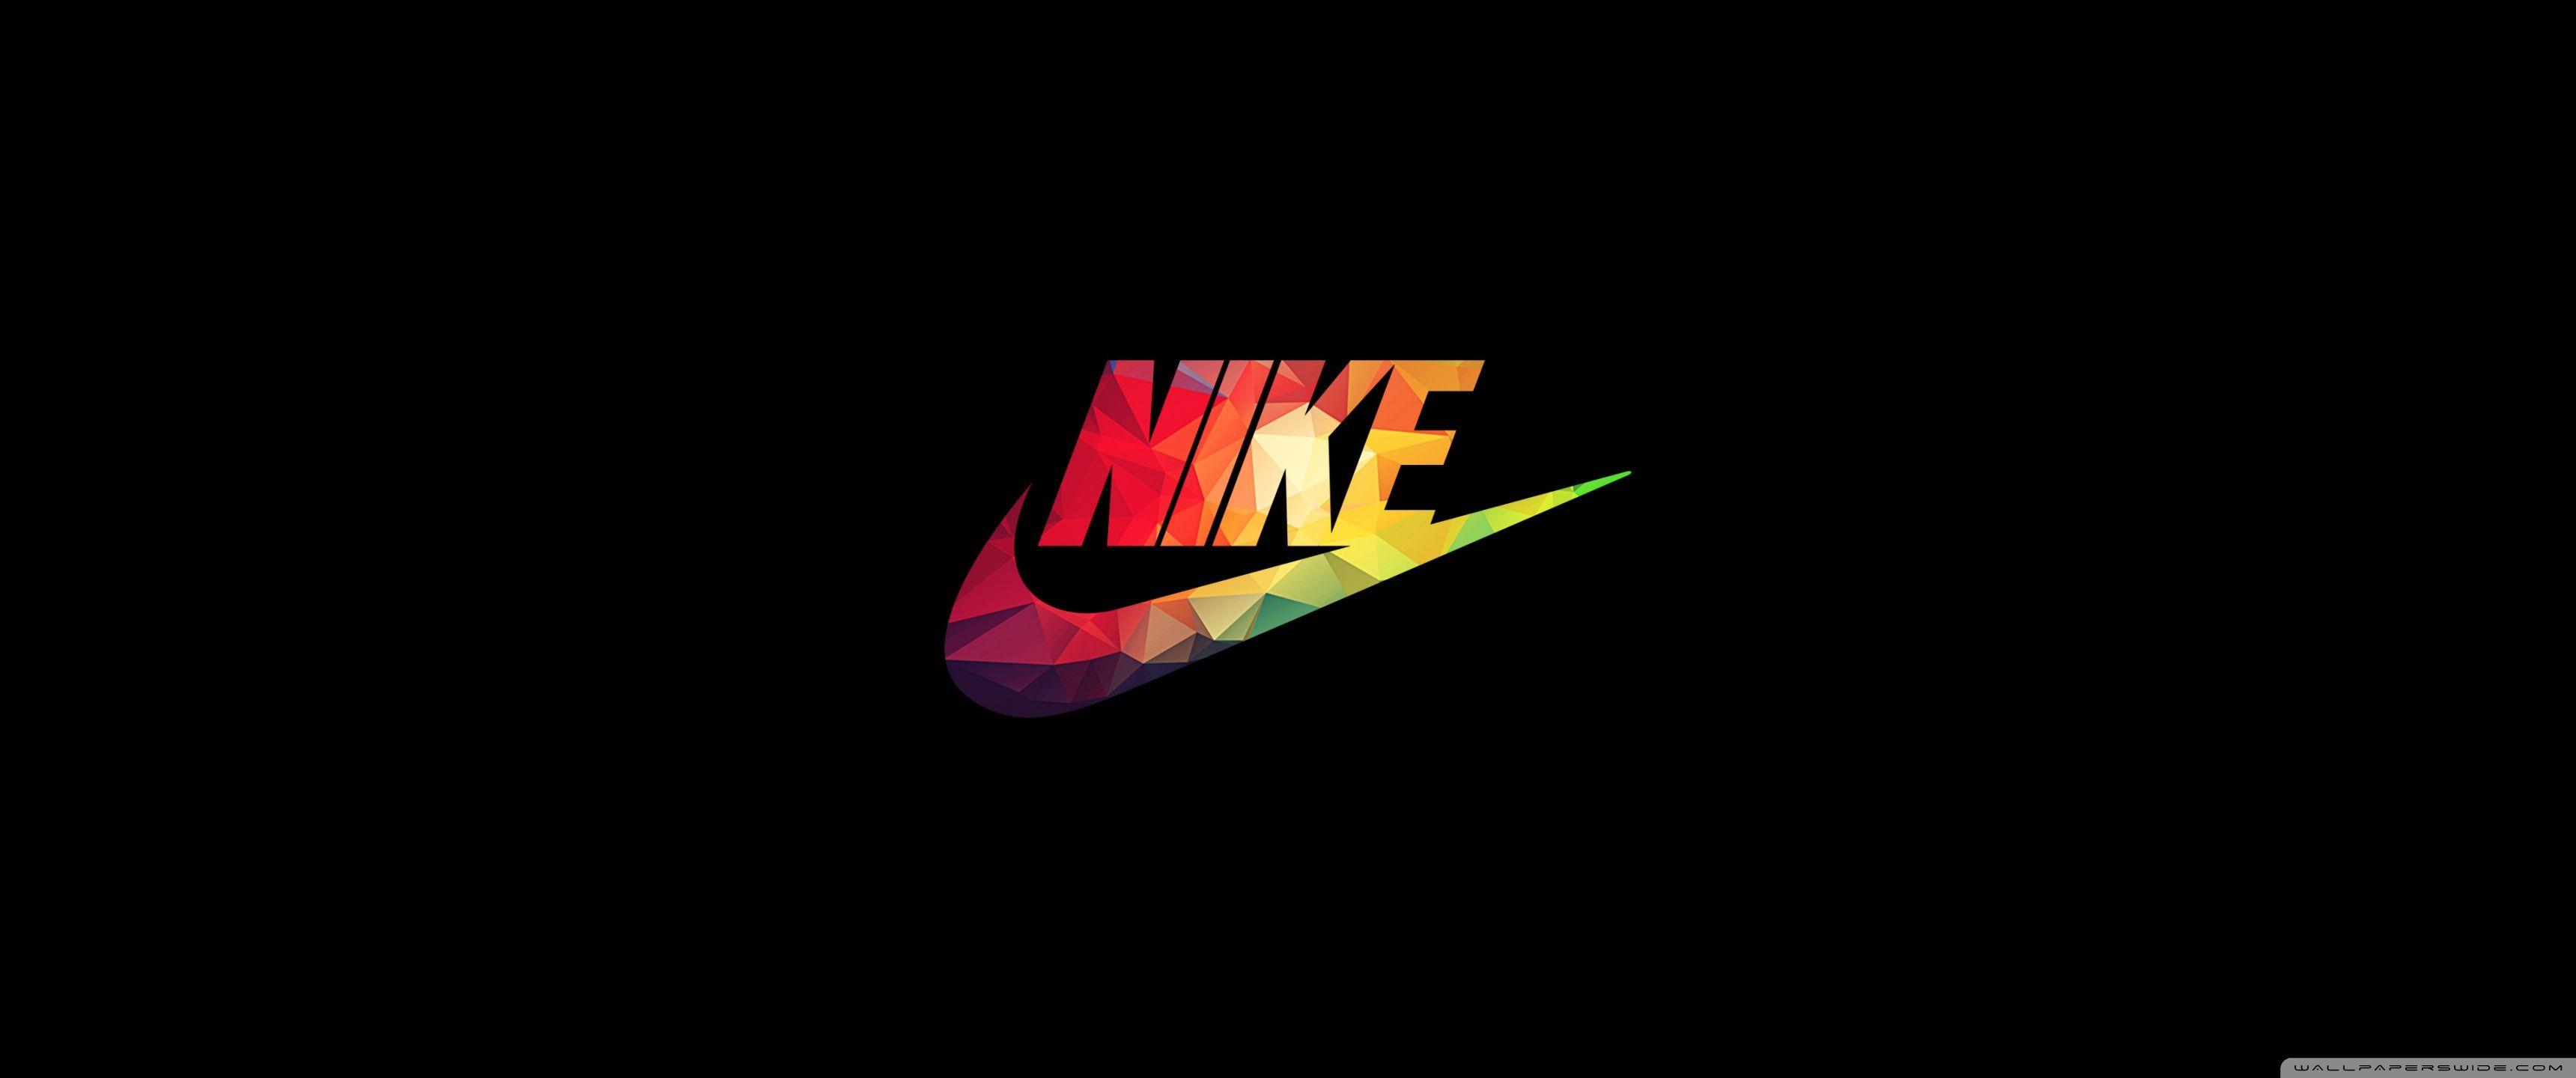 Nike 5 Wallpapers - Wallpaper Cave